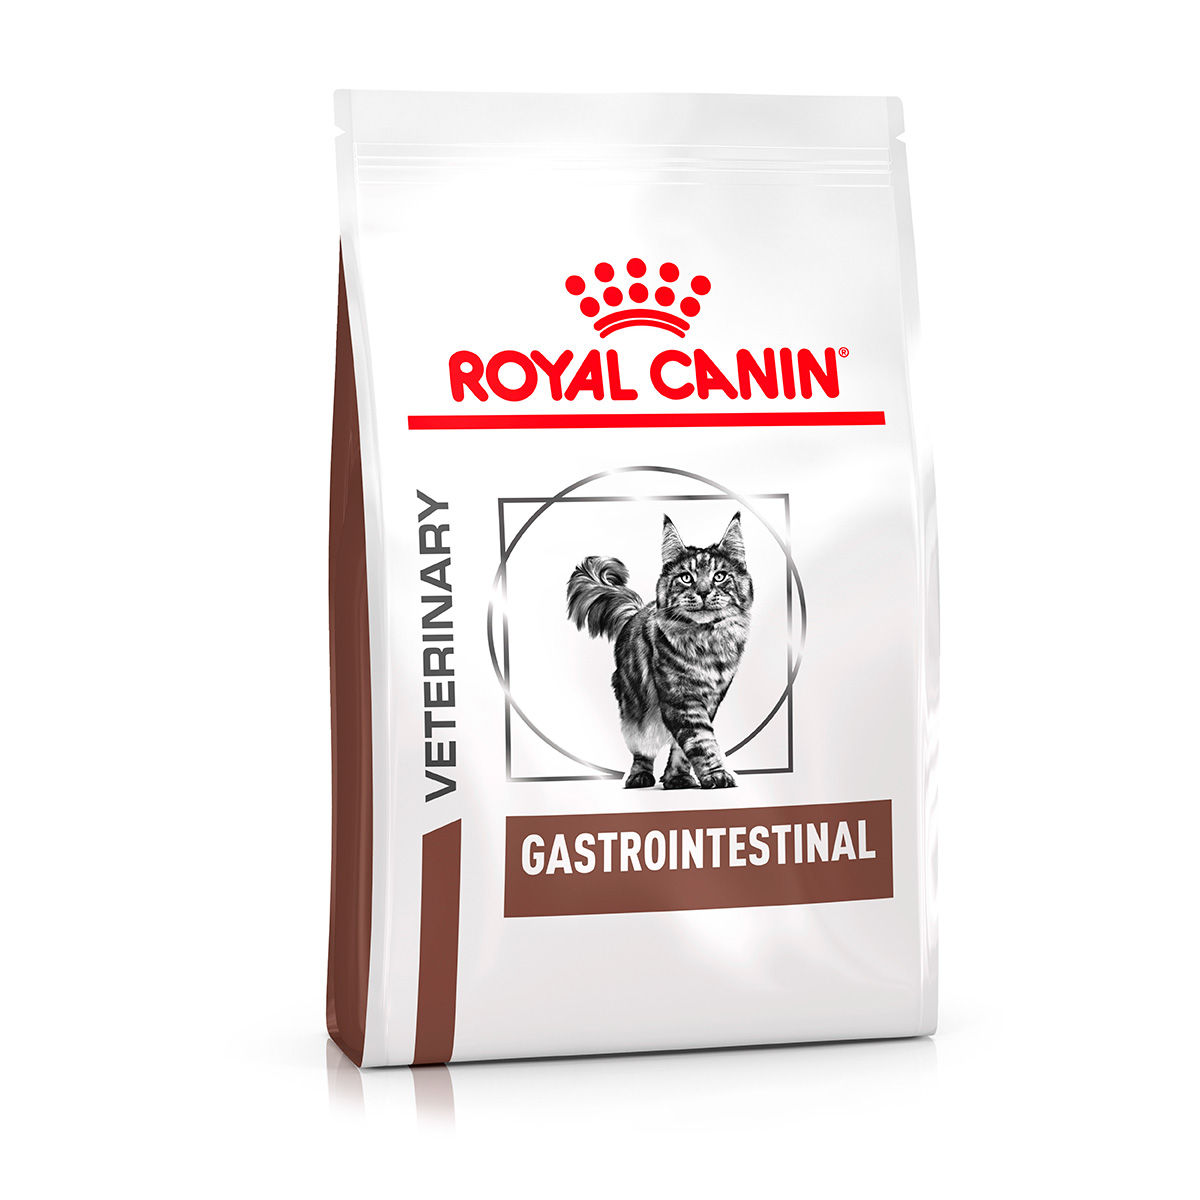 ROYAL CANIN® Veterinary GASTROINTESTINAL Trockenfutter für Katzen 2kg